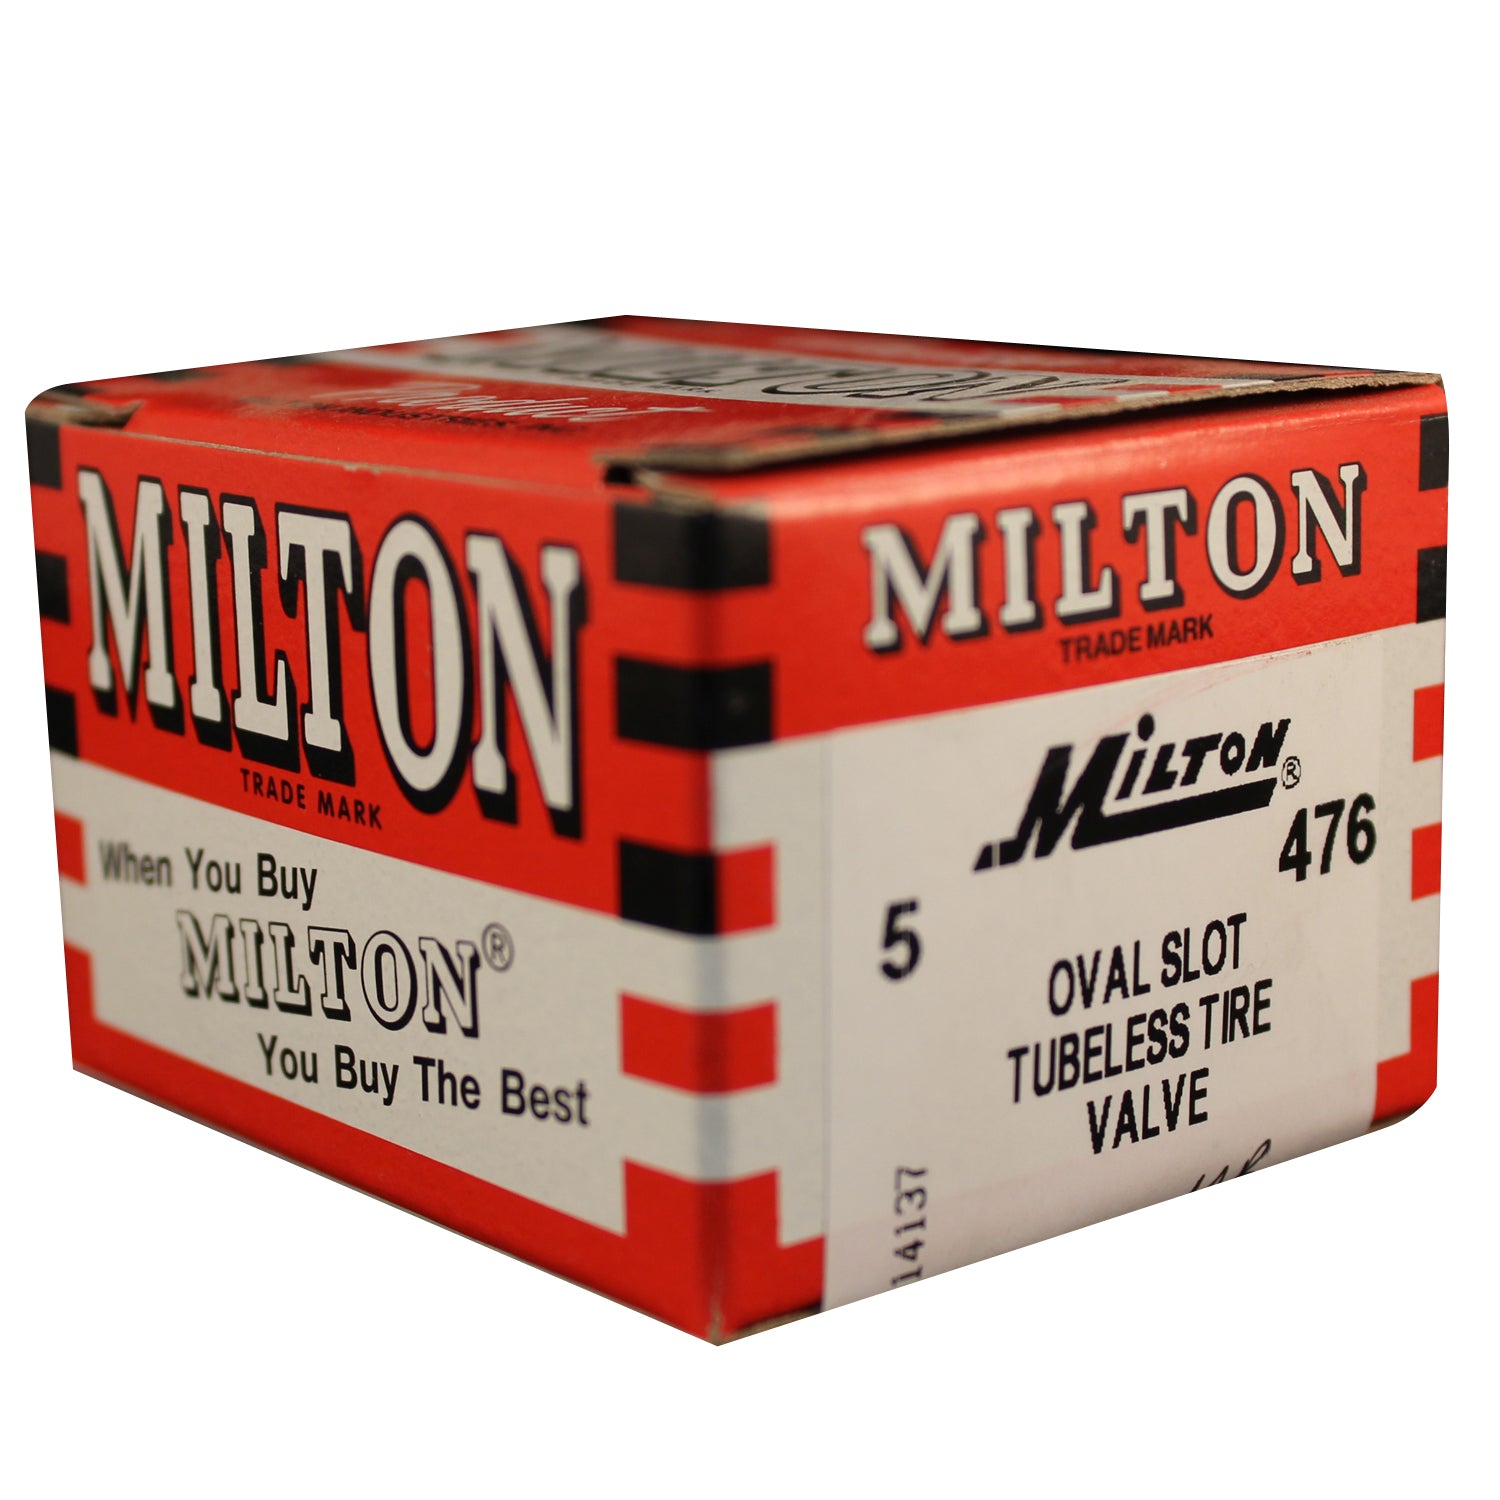 Milton Industries 476 Oval Slot Tubeless Tire Valve - Box of 5